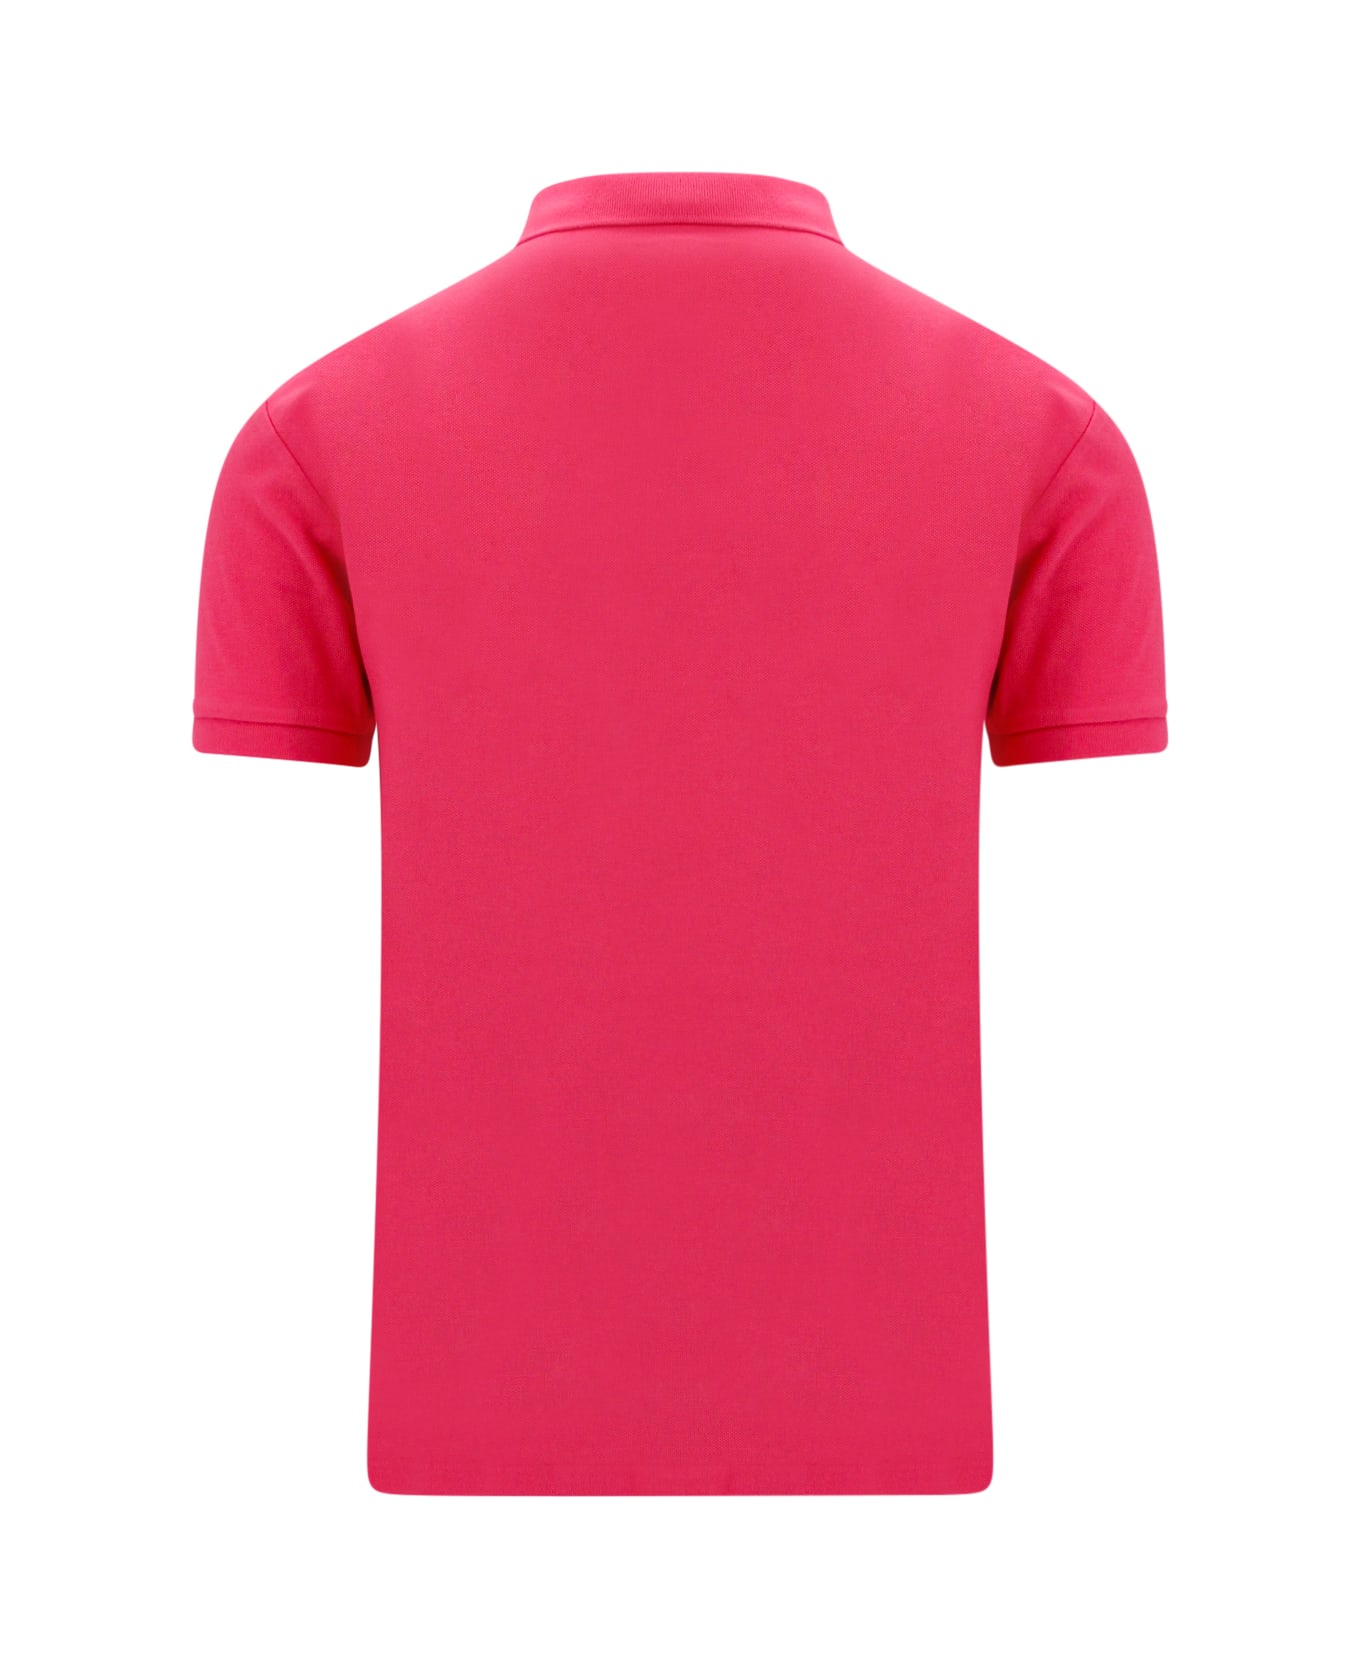 Polo Ralph Lauren Polo Shirt - Pink